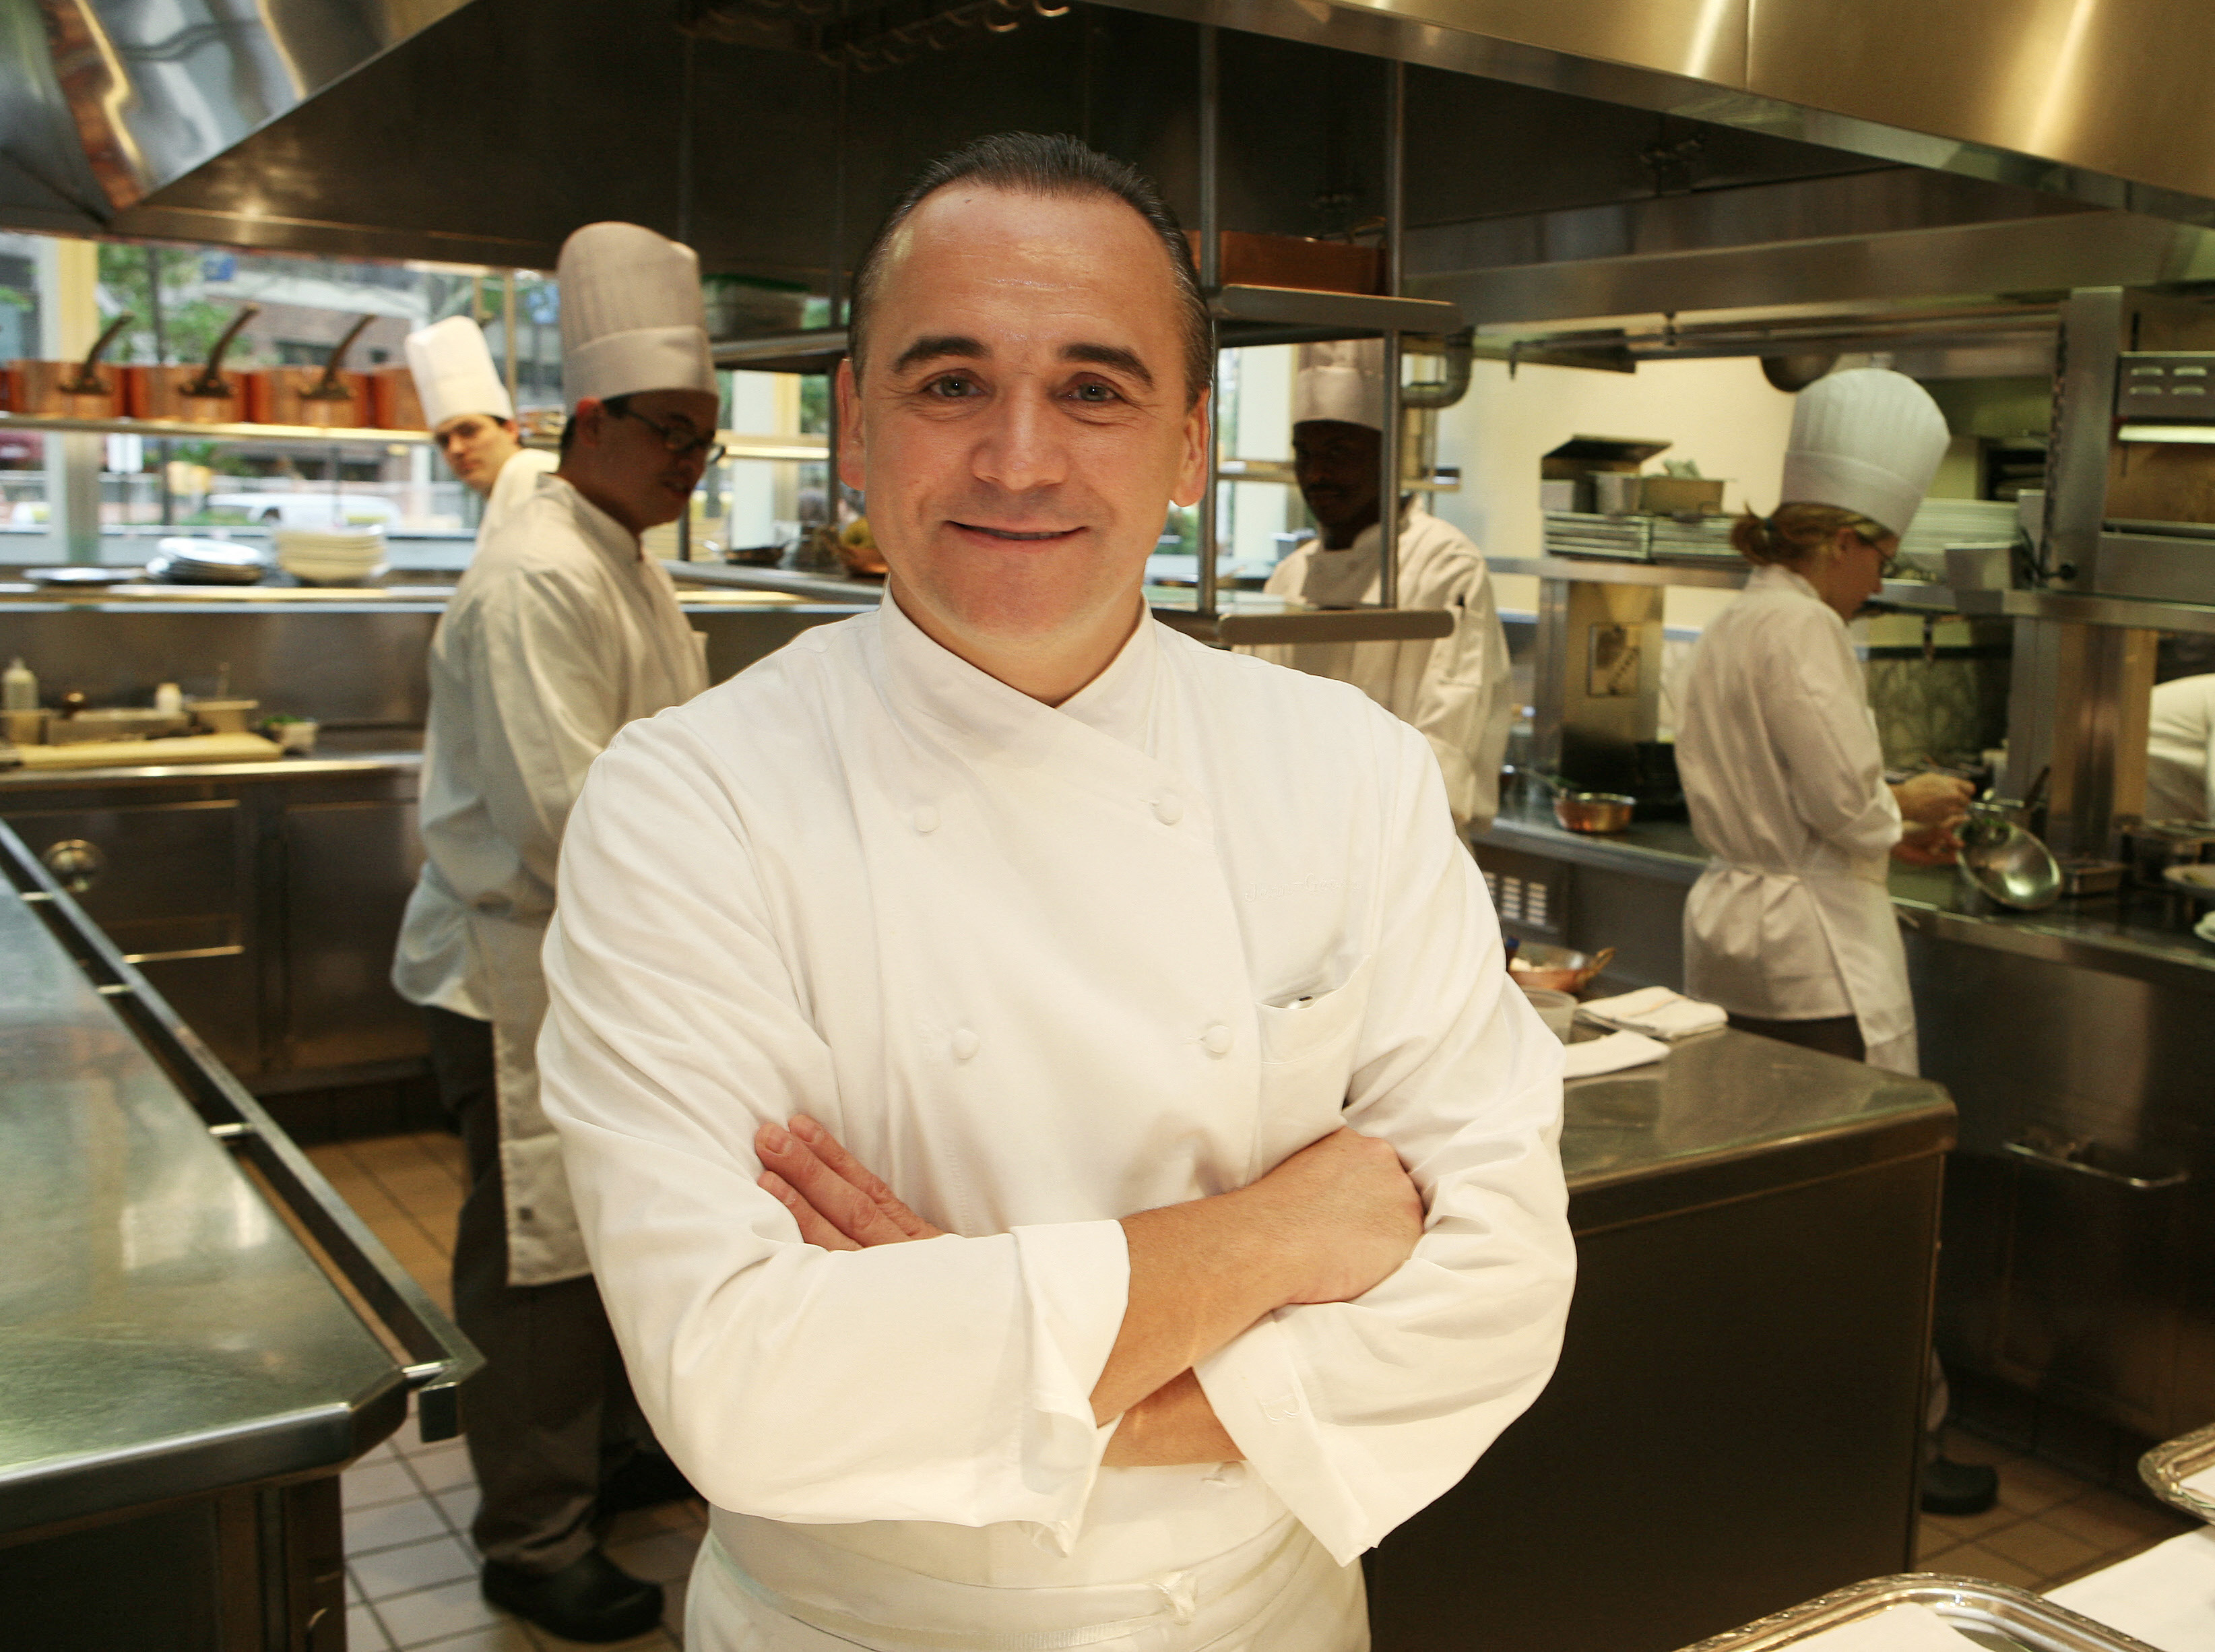 Chef Jean-Georges Vongerichten crossing his arms in front of kitchen staff at work.